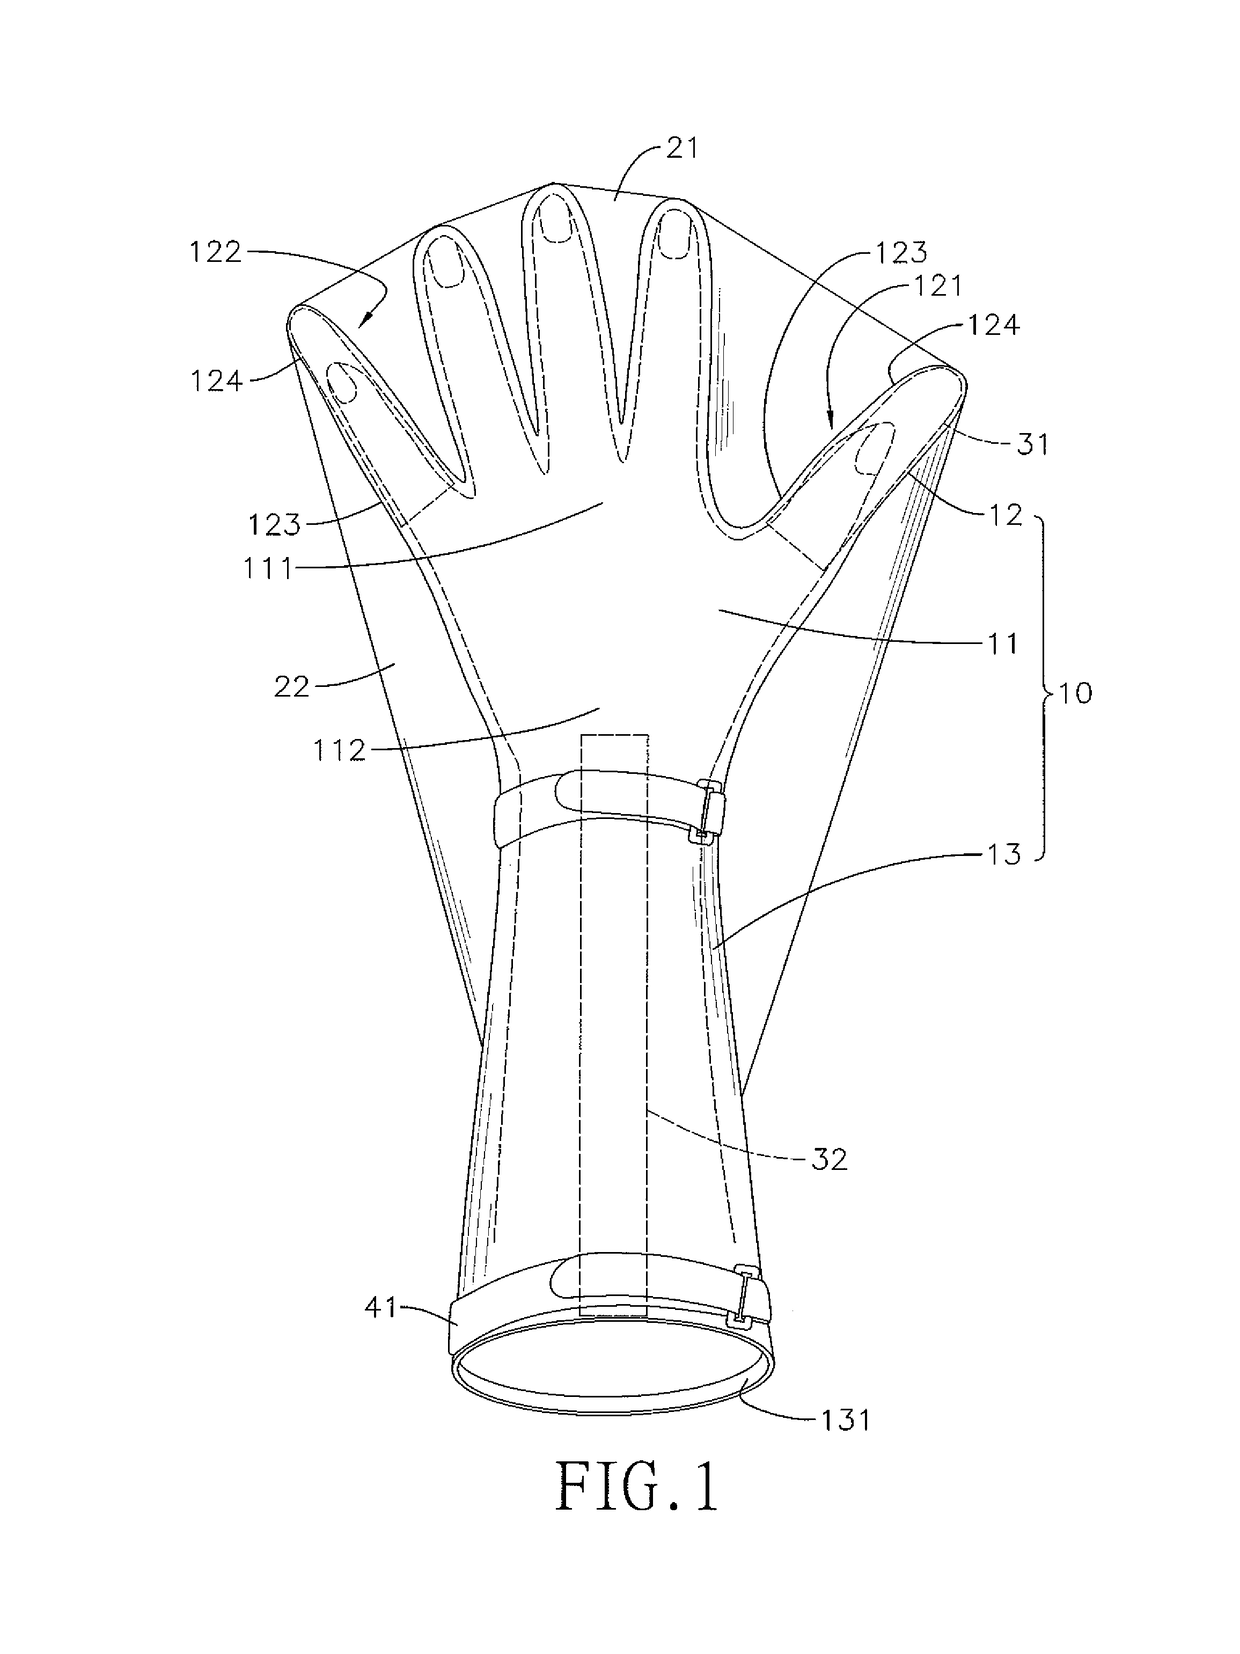 Six-webbed glove